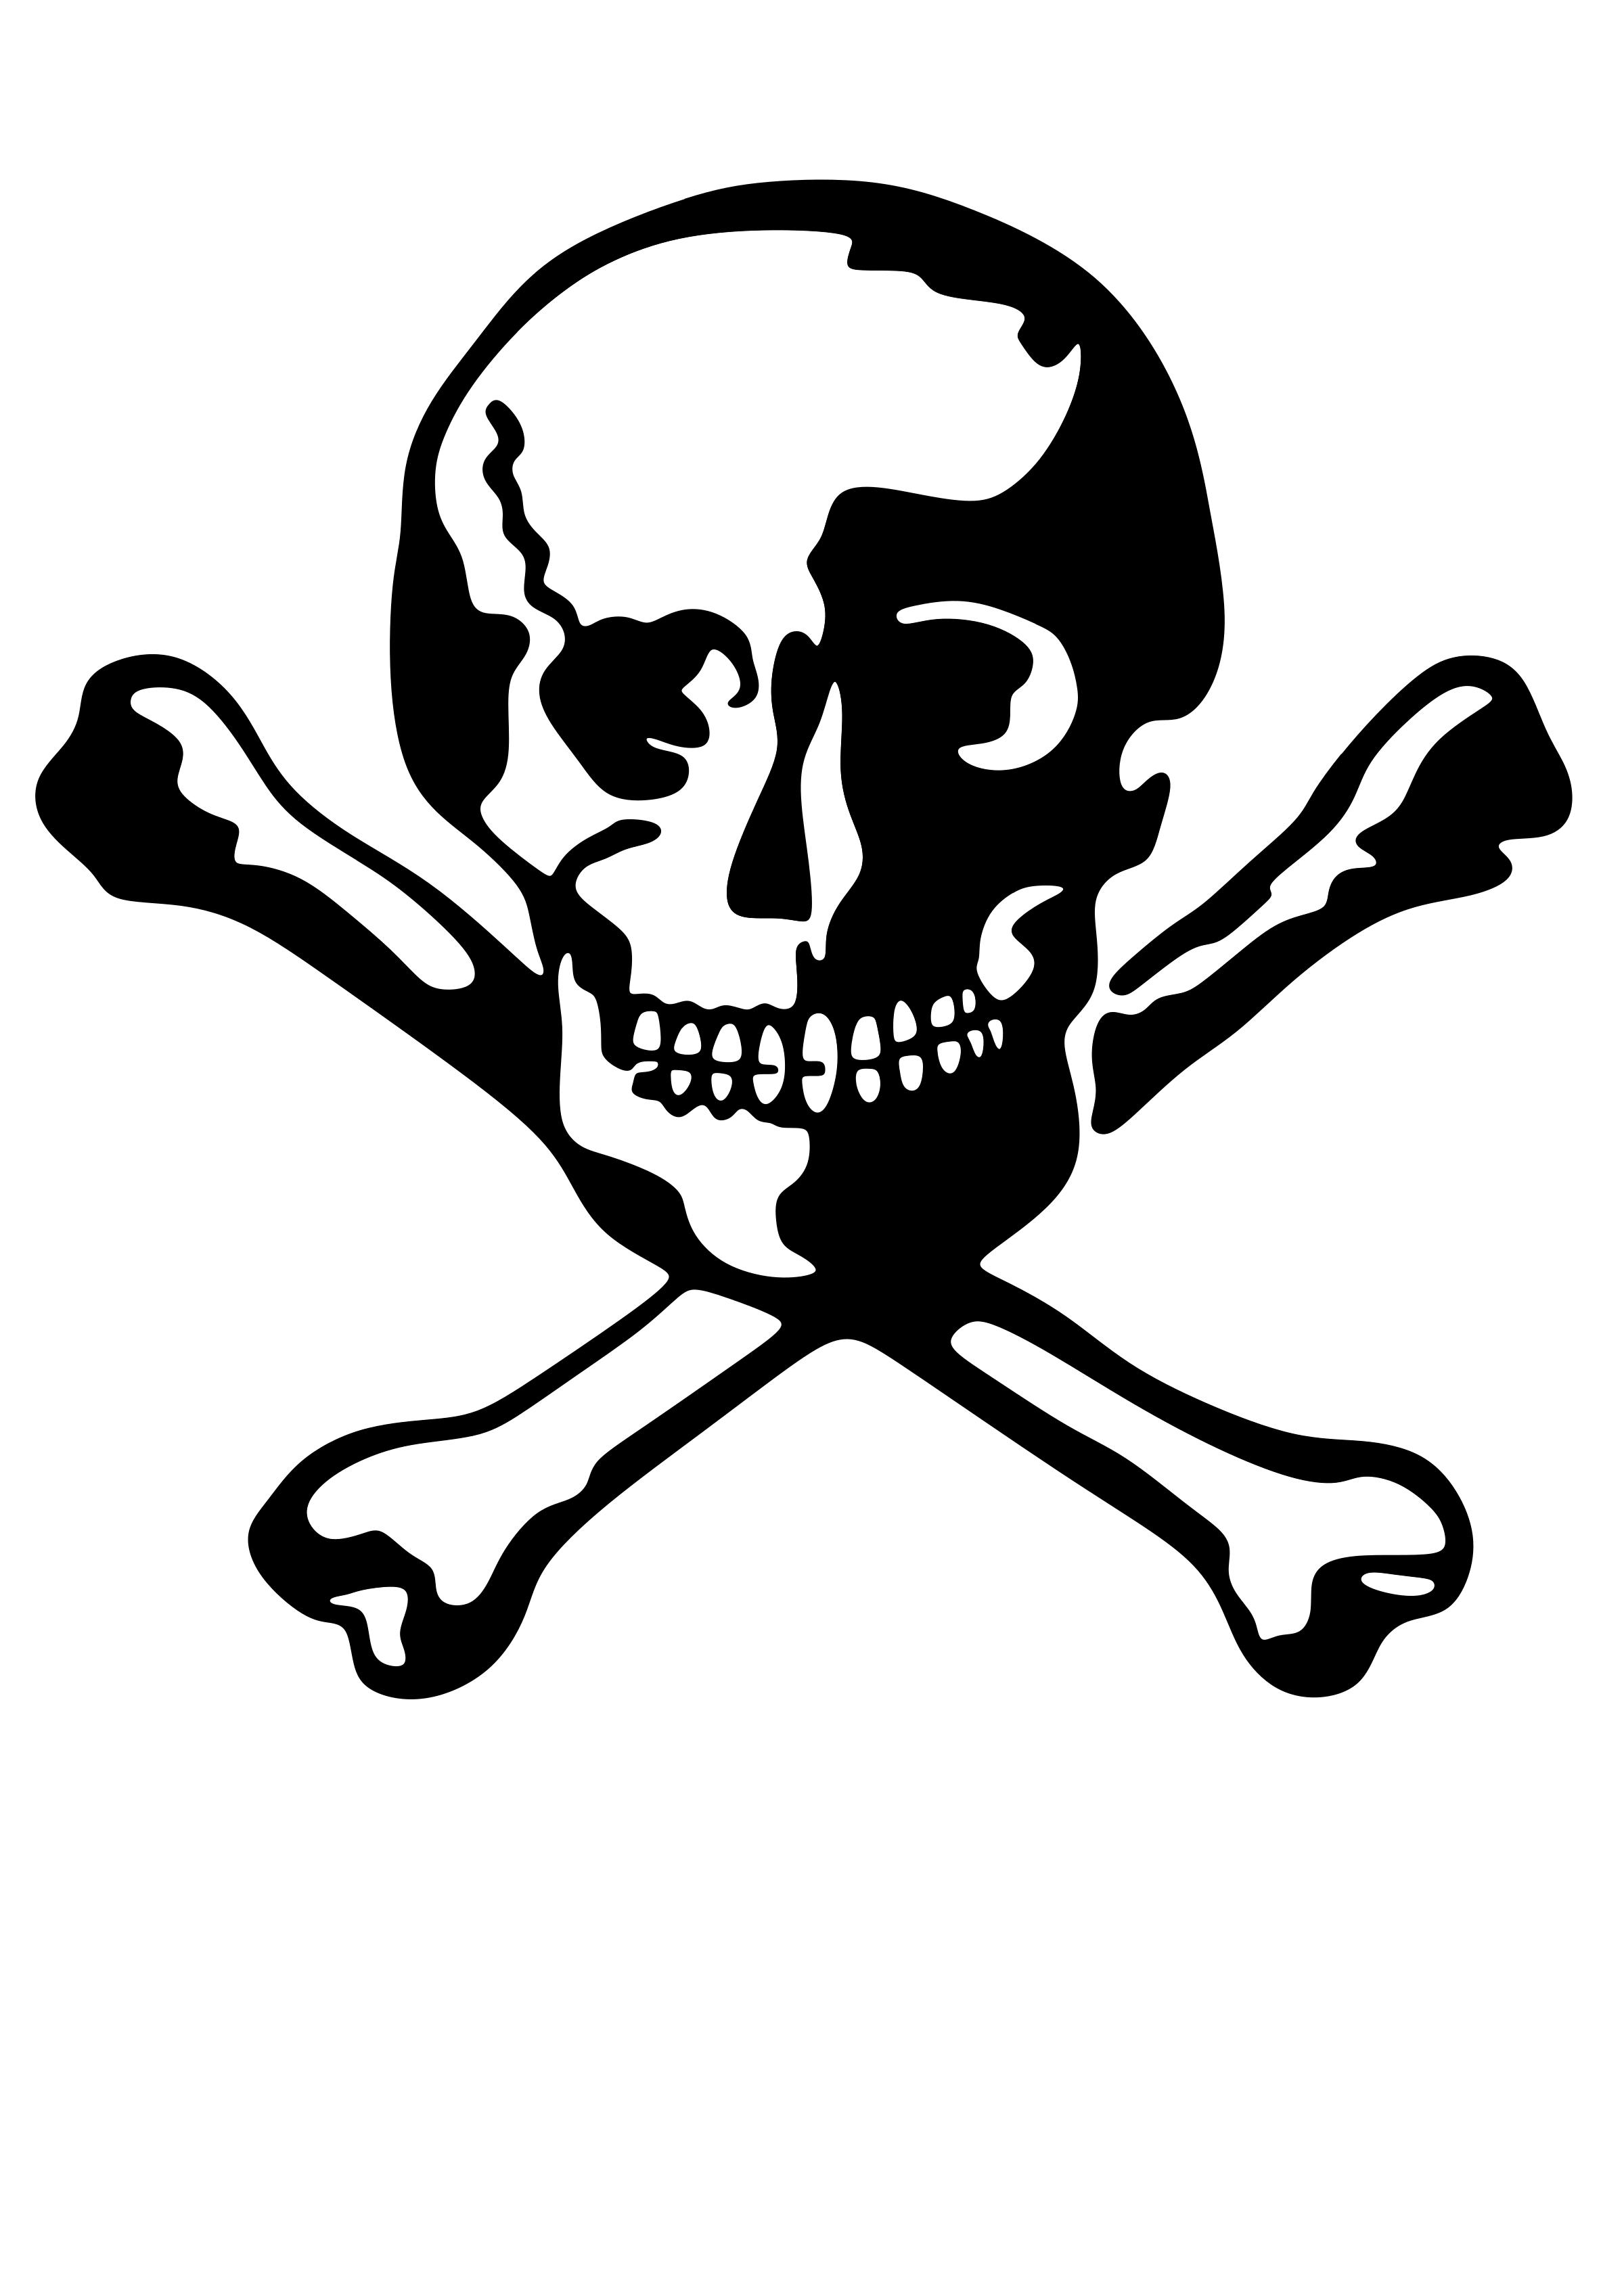 Skull stencil design icons